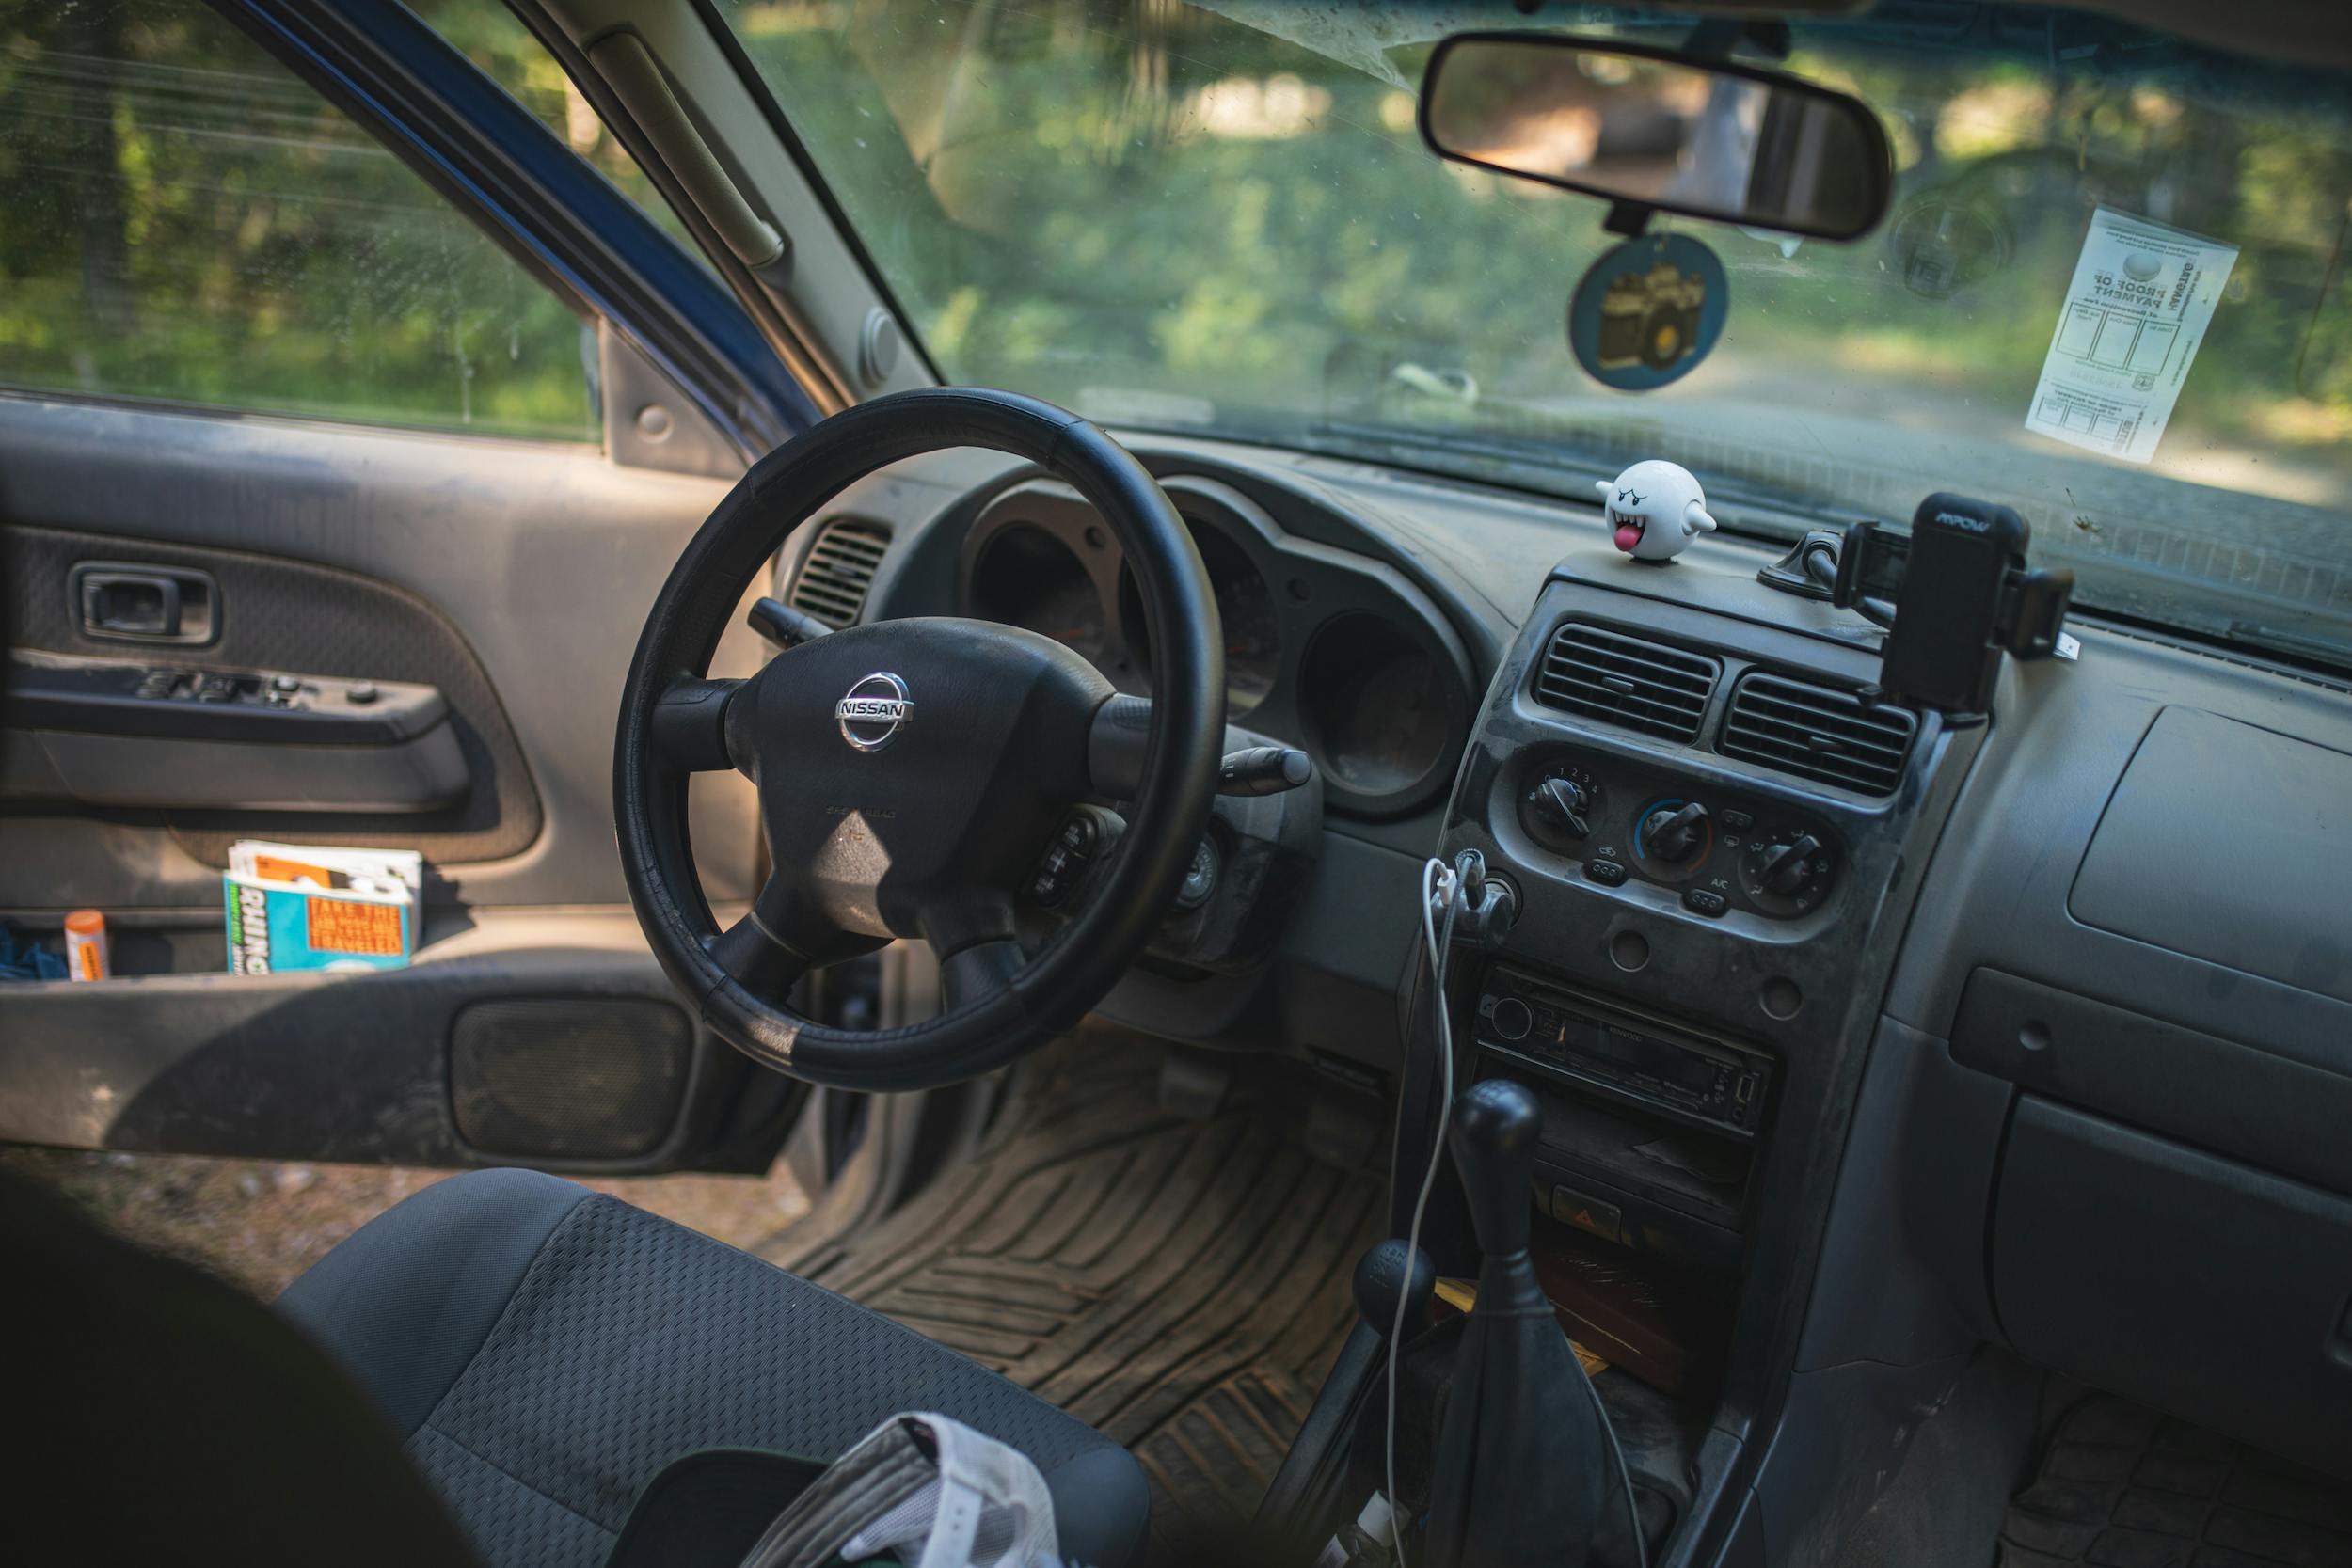 WABDR Nissan Xterra off-road adventure interior front